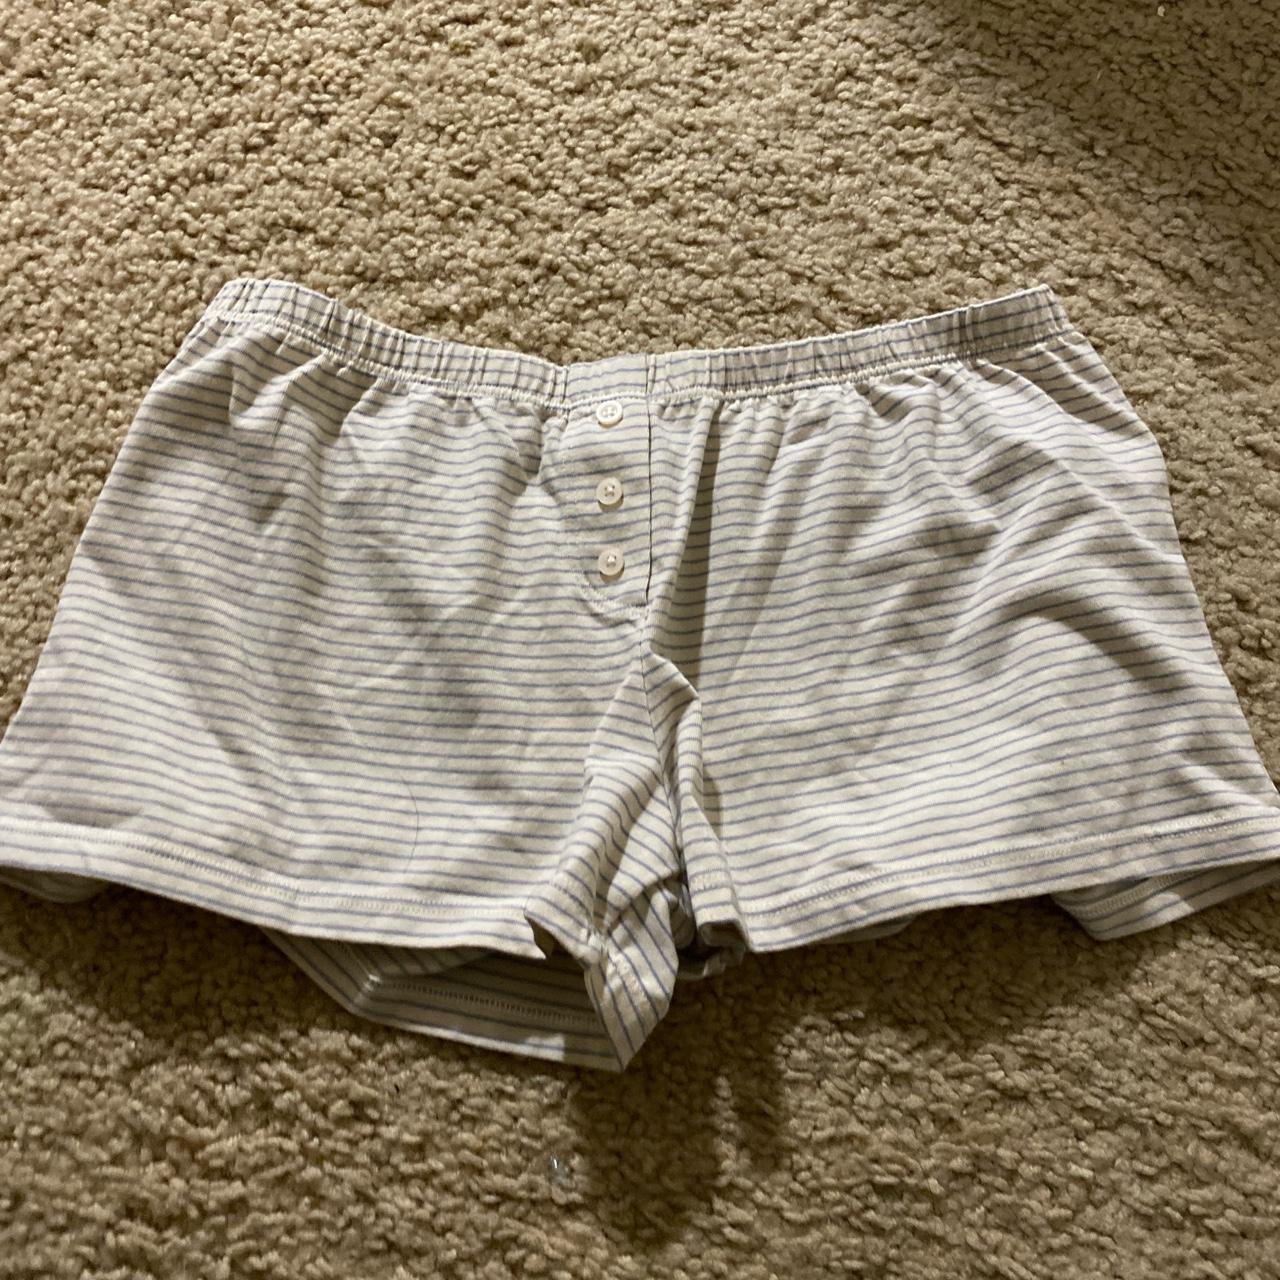 Brandy Melville striped eyelet boy shorts underwear - Depop